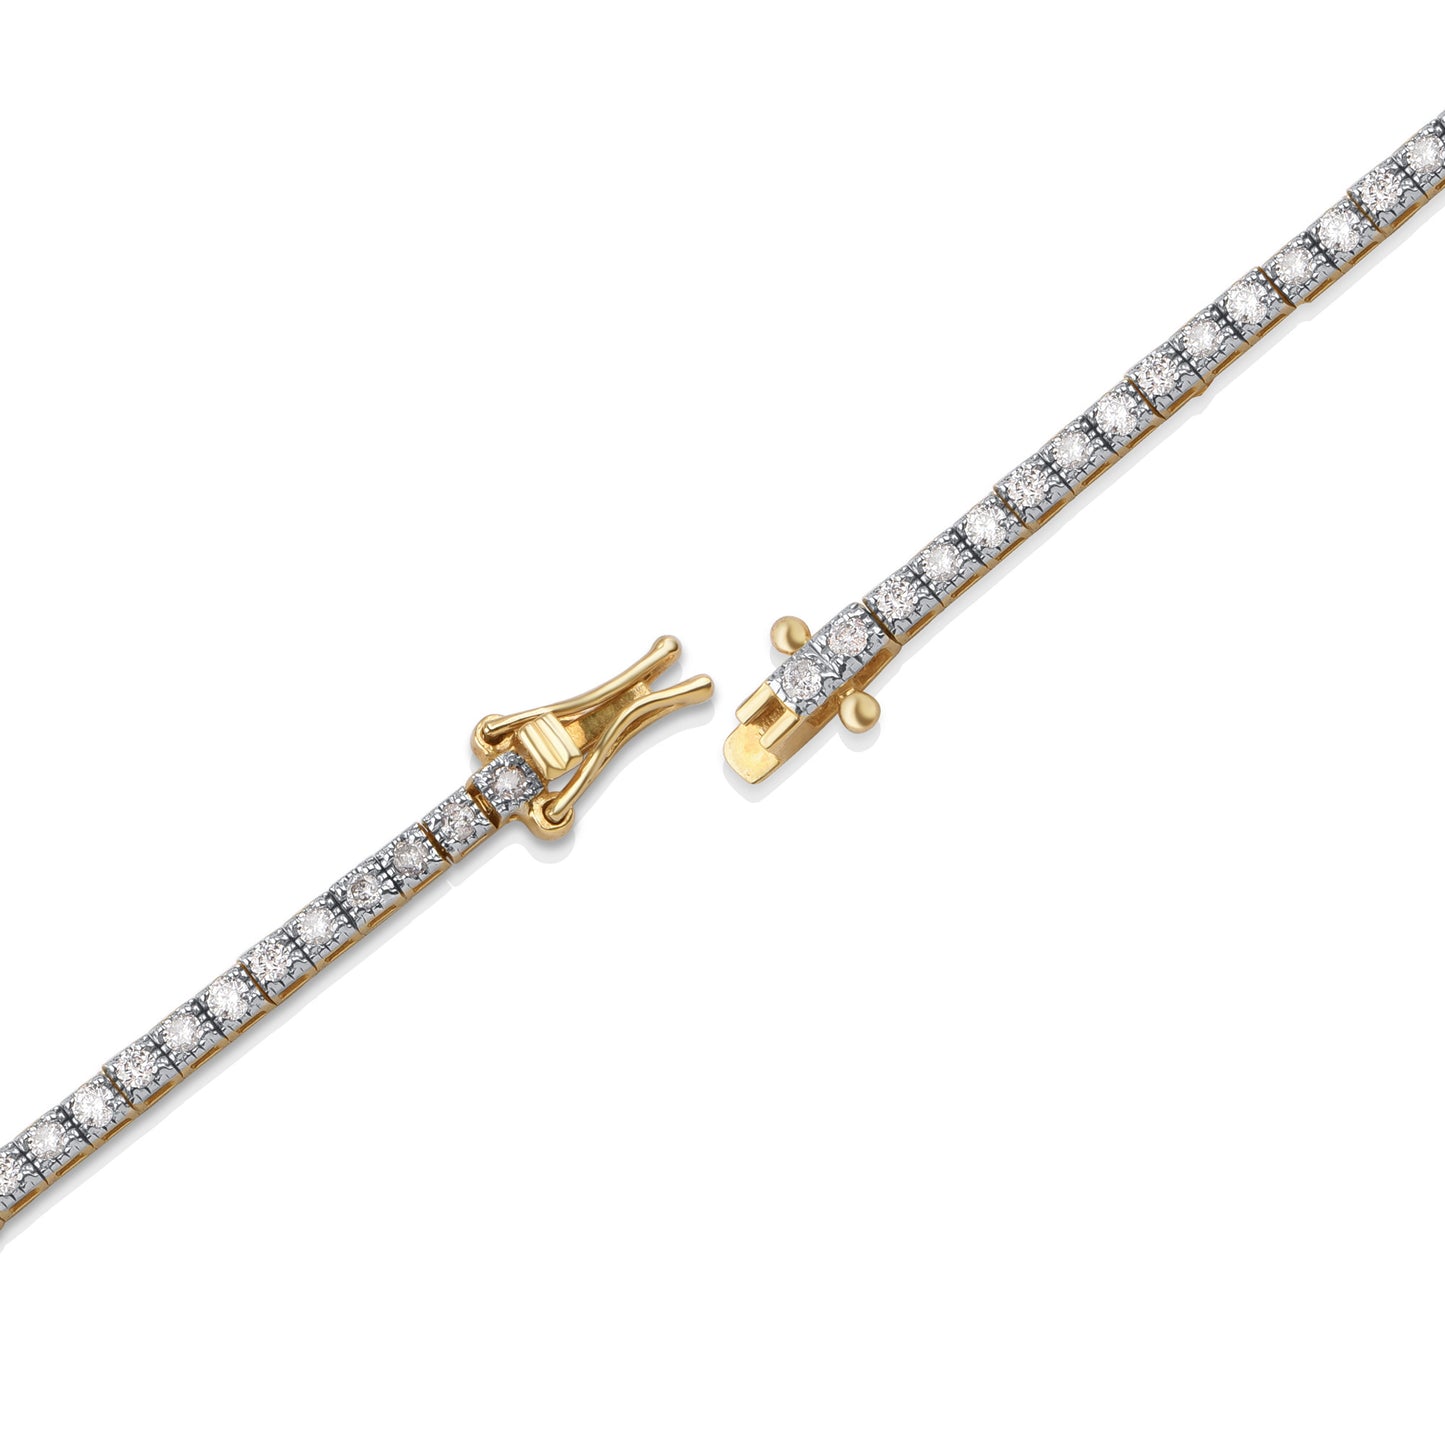 10k Gold Tennis Bracelet